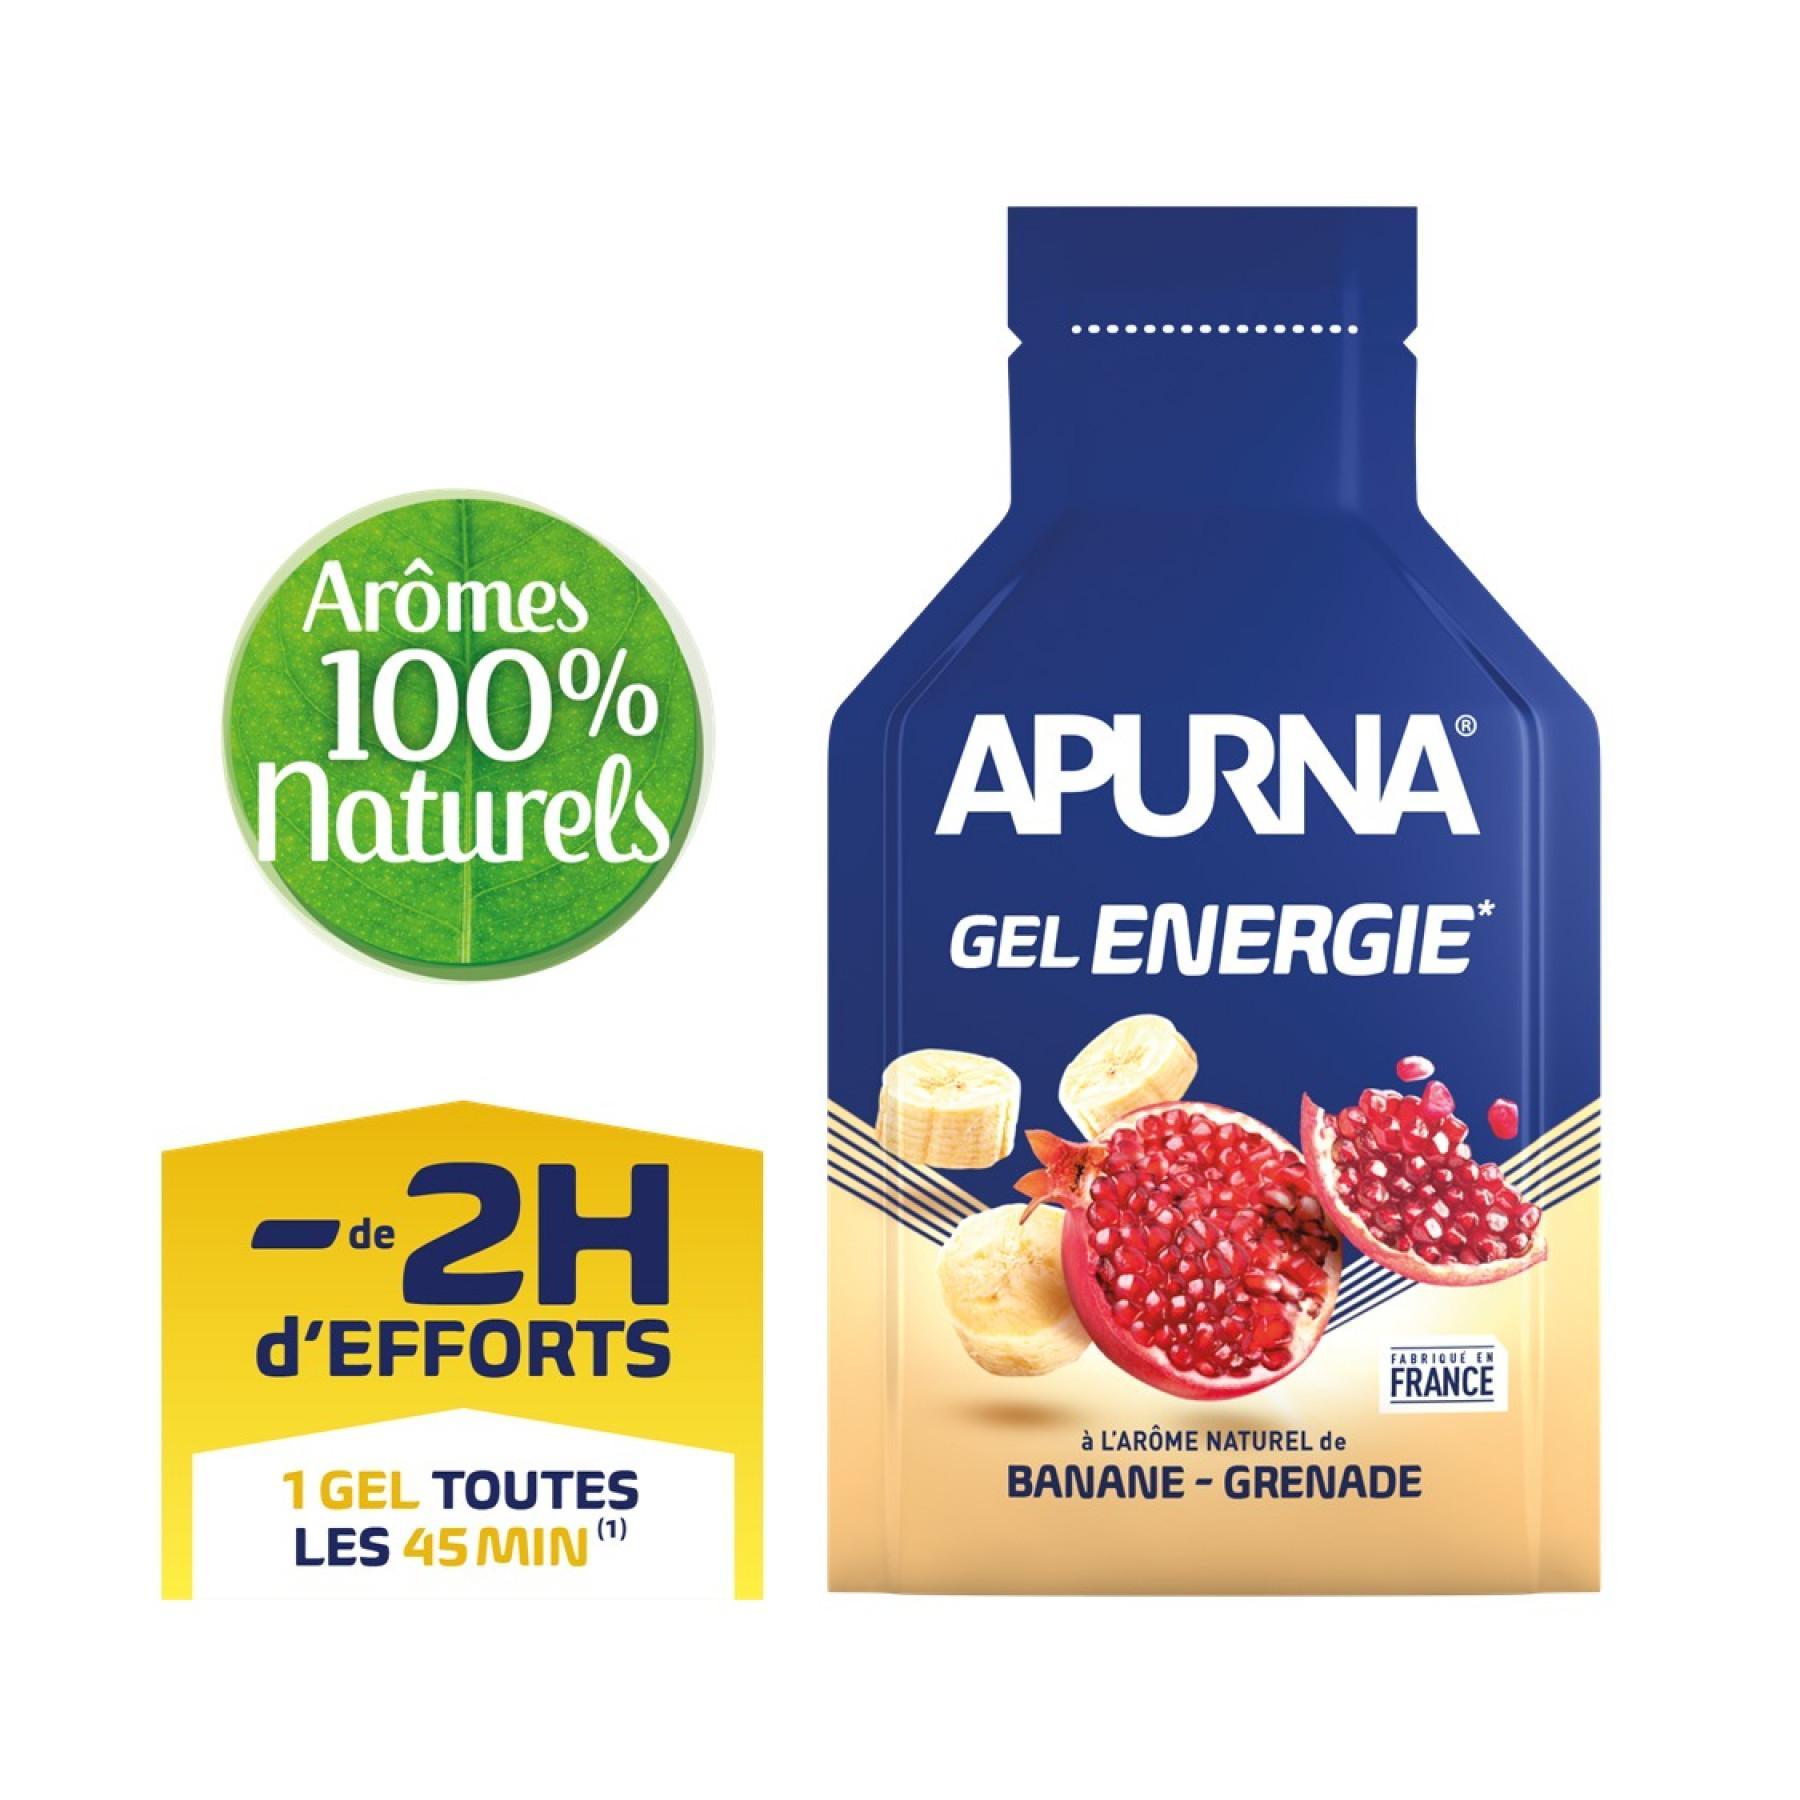 Confezione da 24 gel Apurna Energie banane grenade - 35g